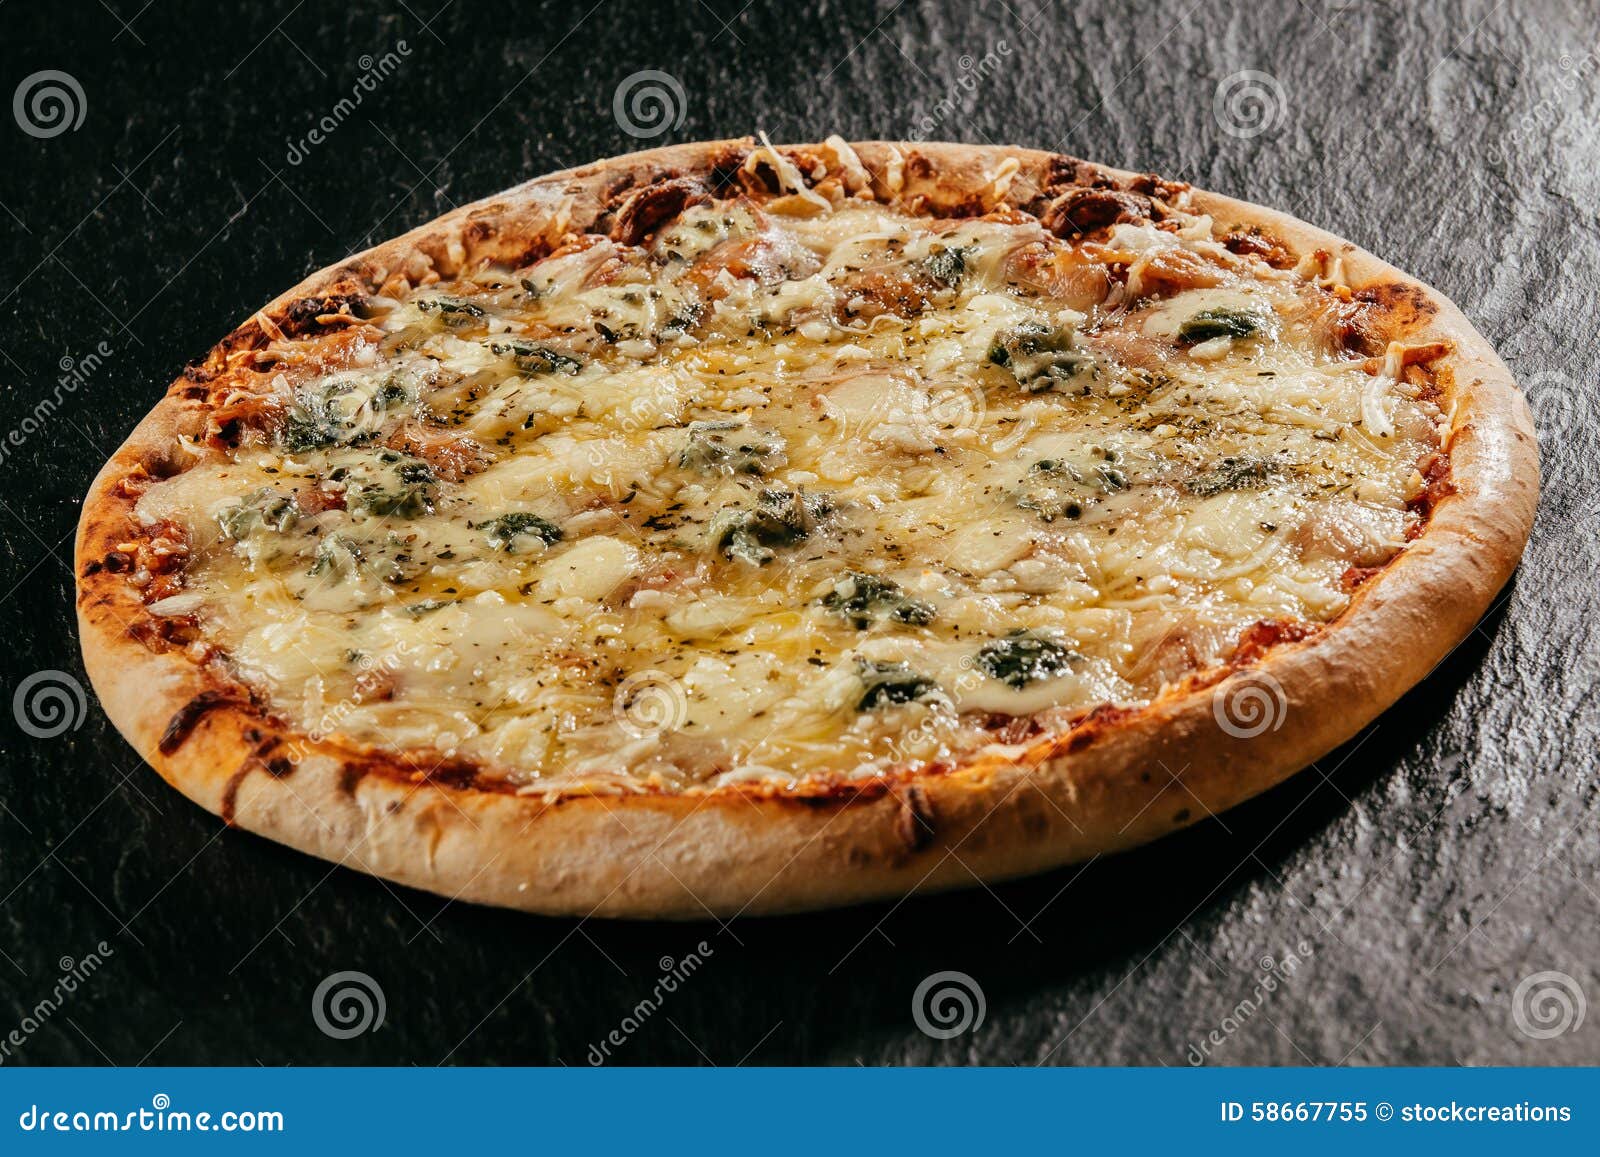 пицца замороженная la trattoria четыре сыра фото 74